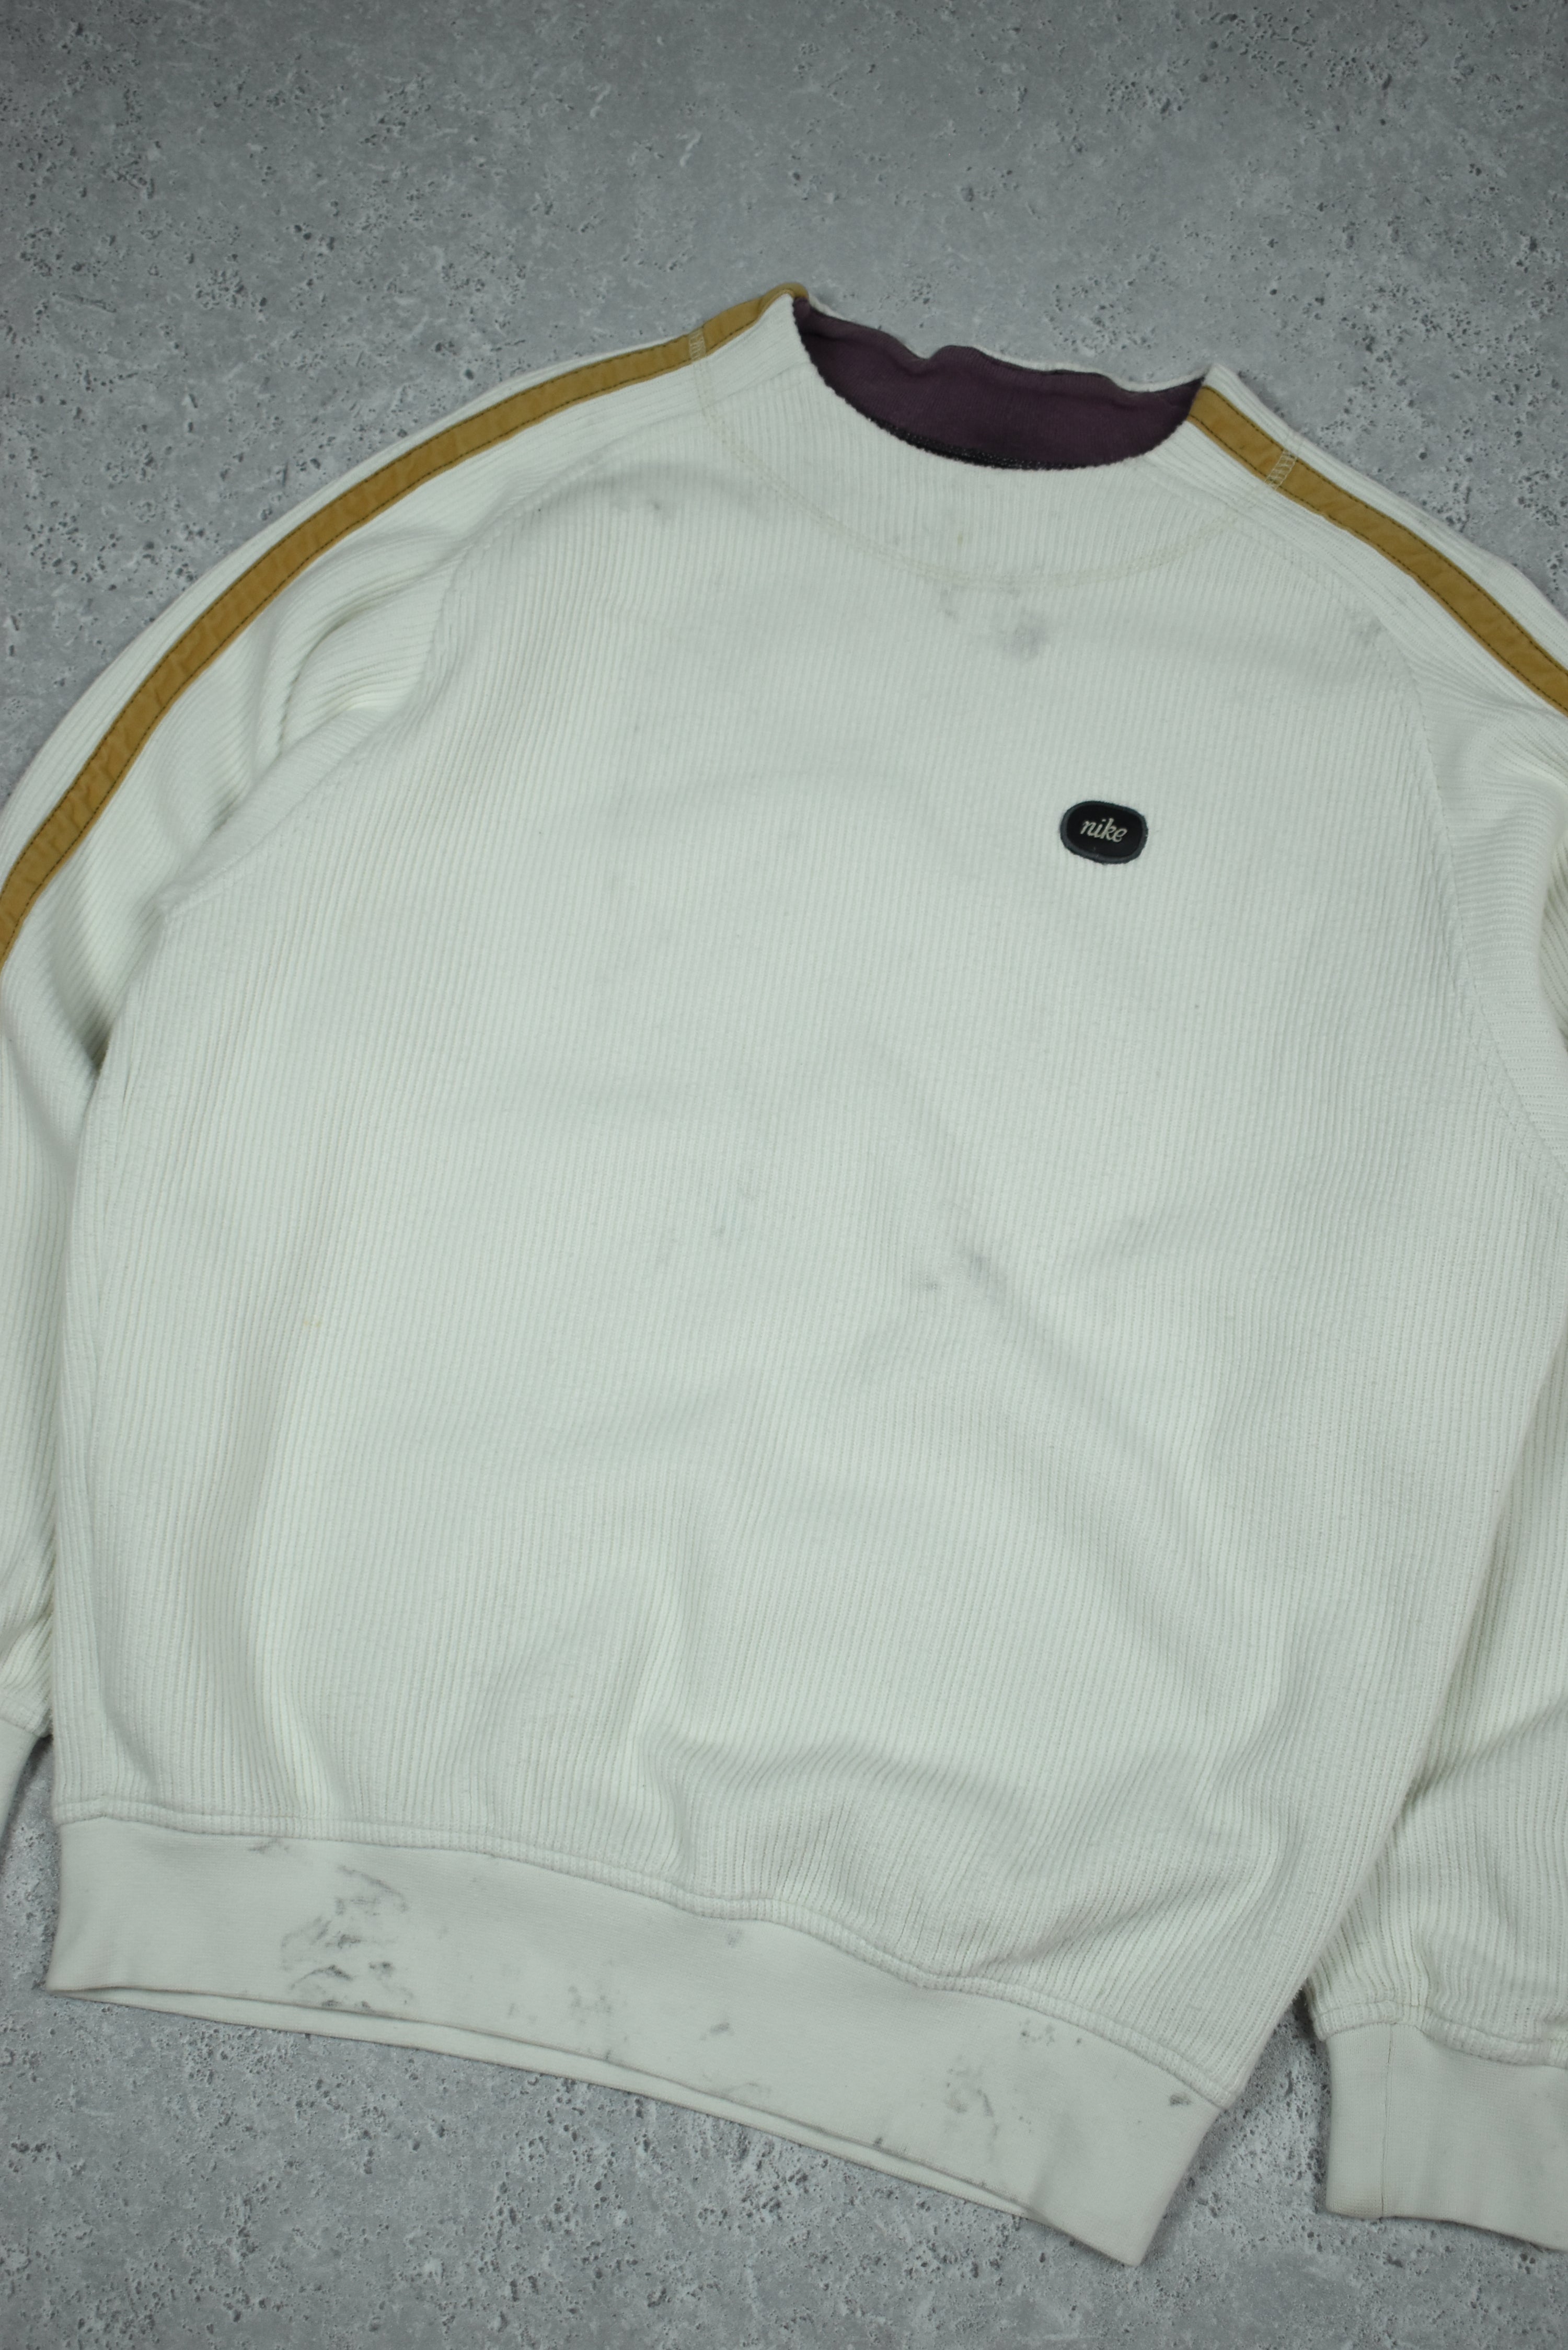 Vintage Nike Embroidery Logo Cord Sweatshirt Small